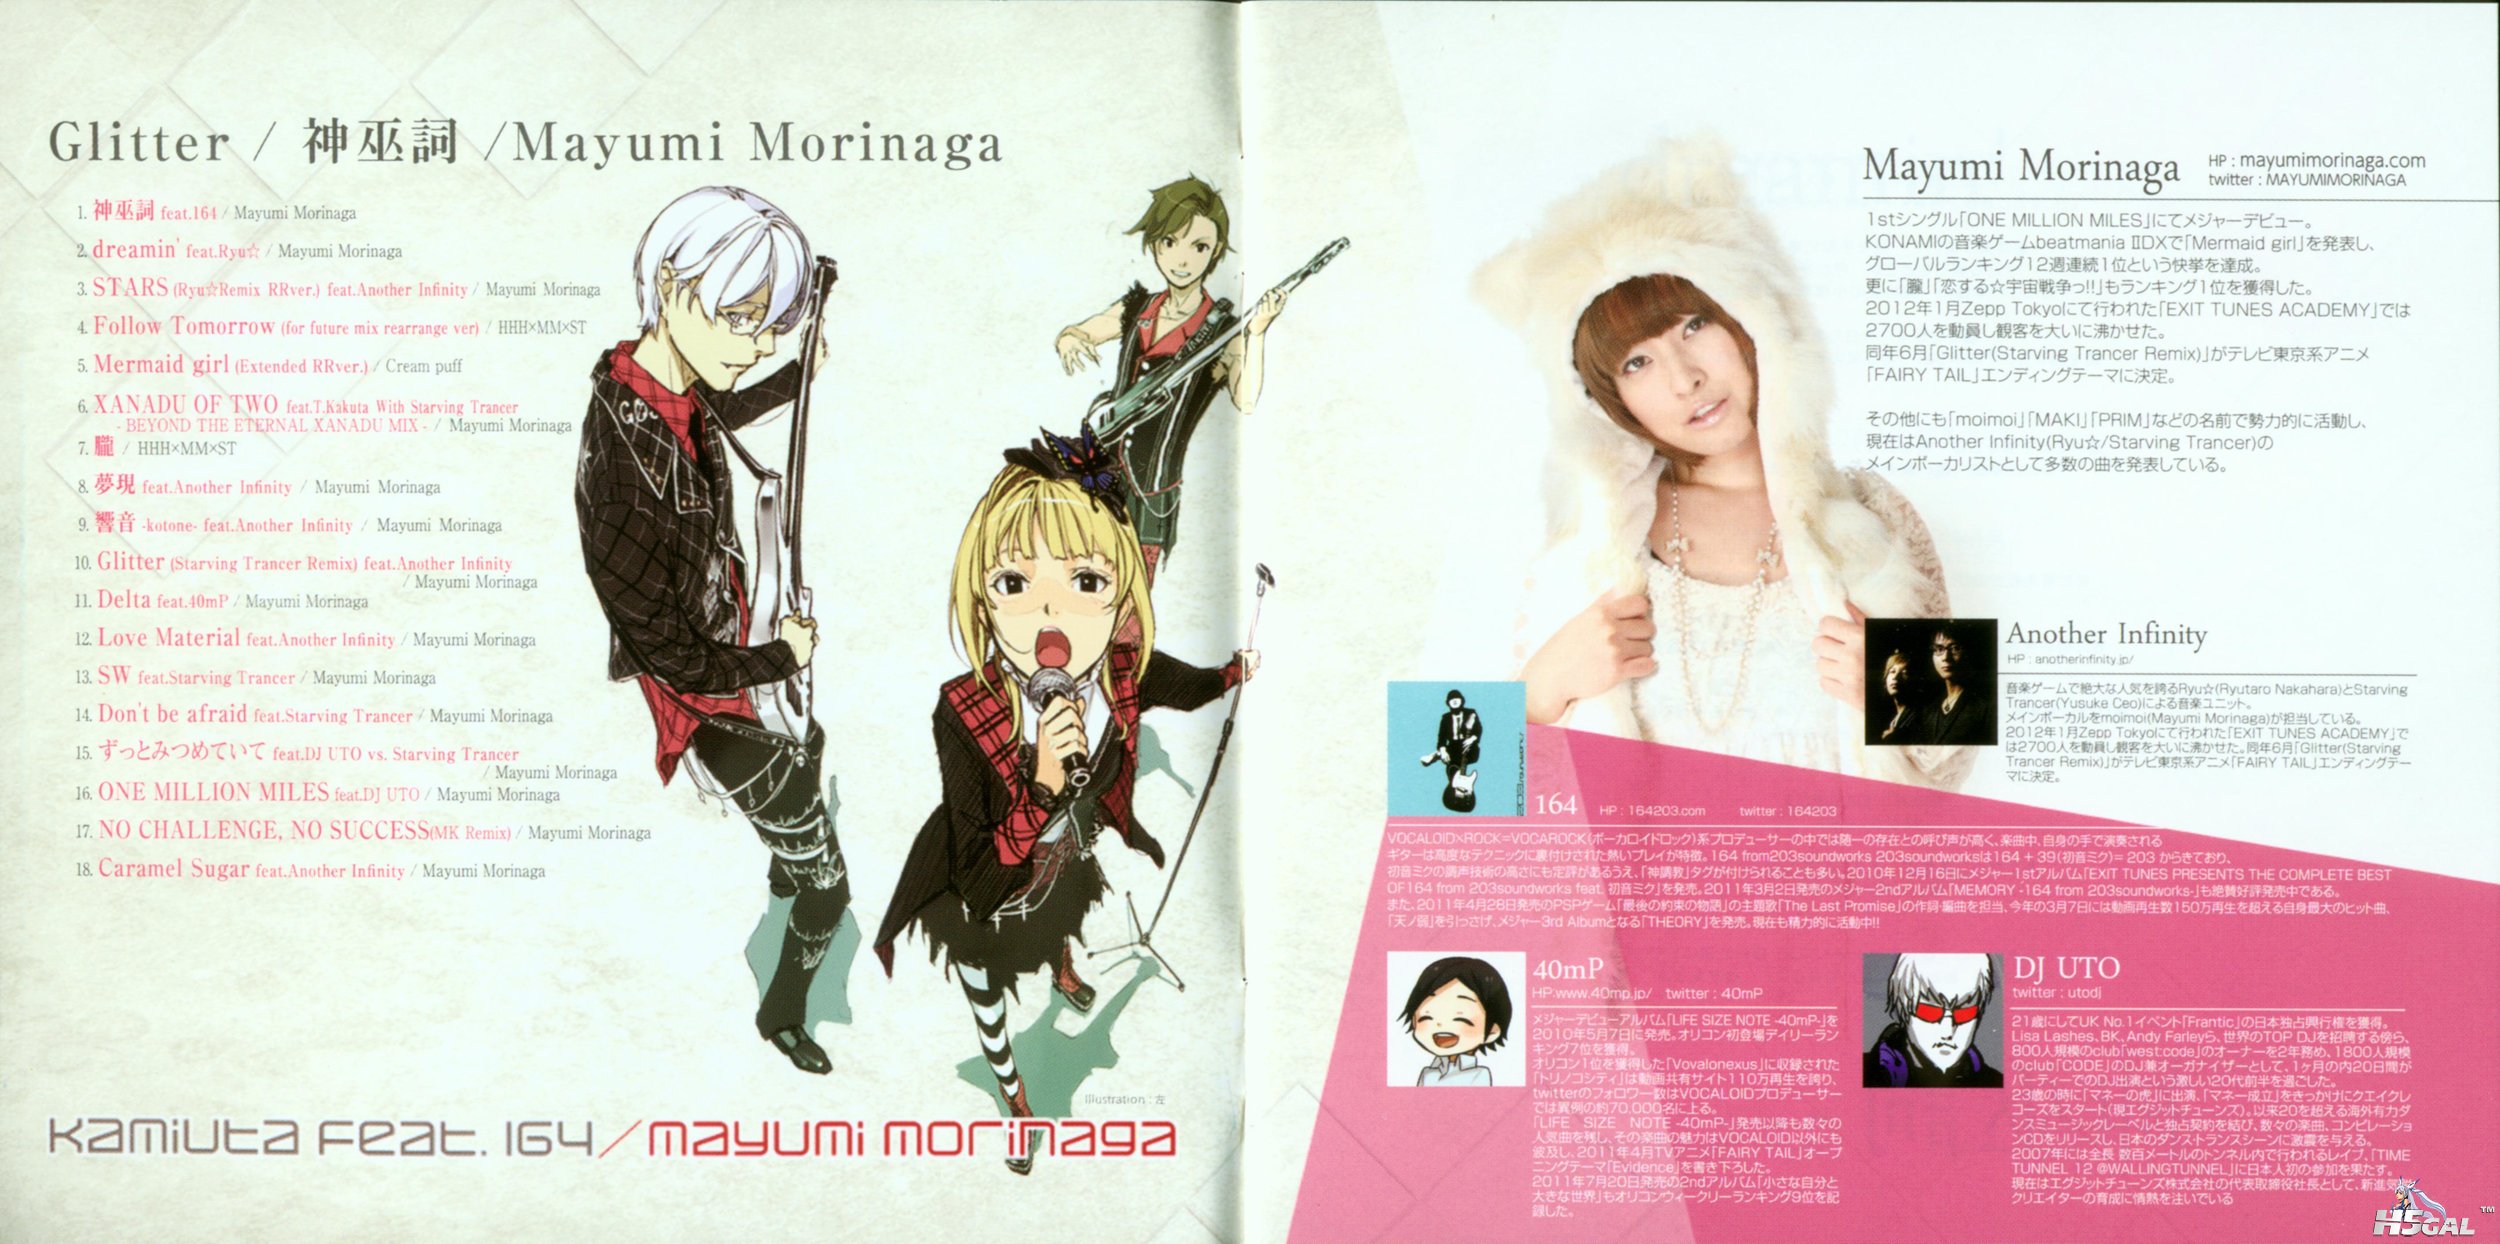 [QTS] Mayumi Morinaga 1st Album - Glitter - KAMIUTA (Regular Edition)_06.jpg